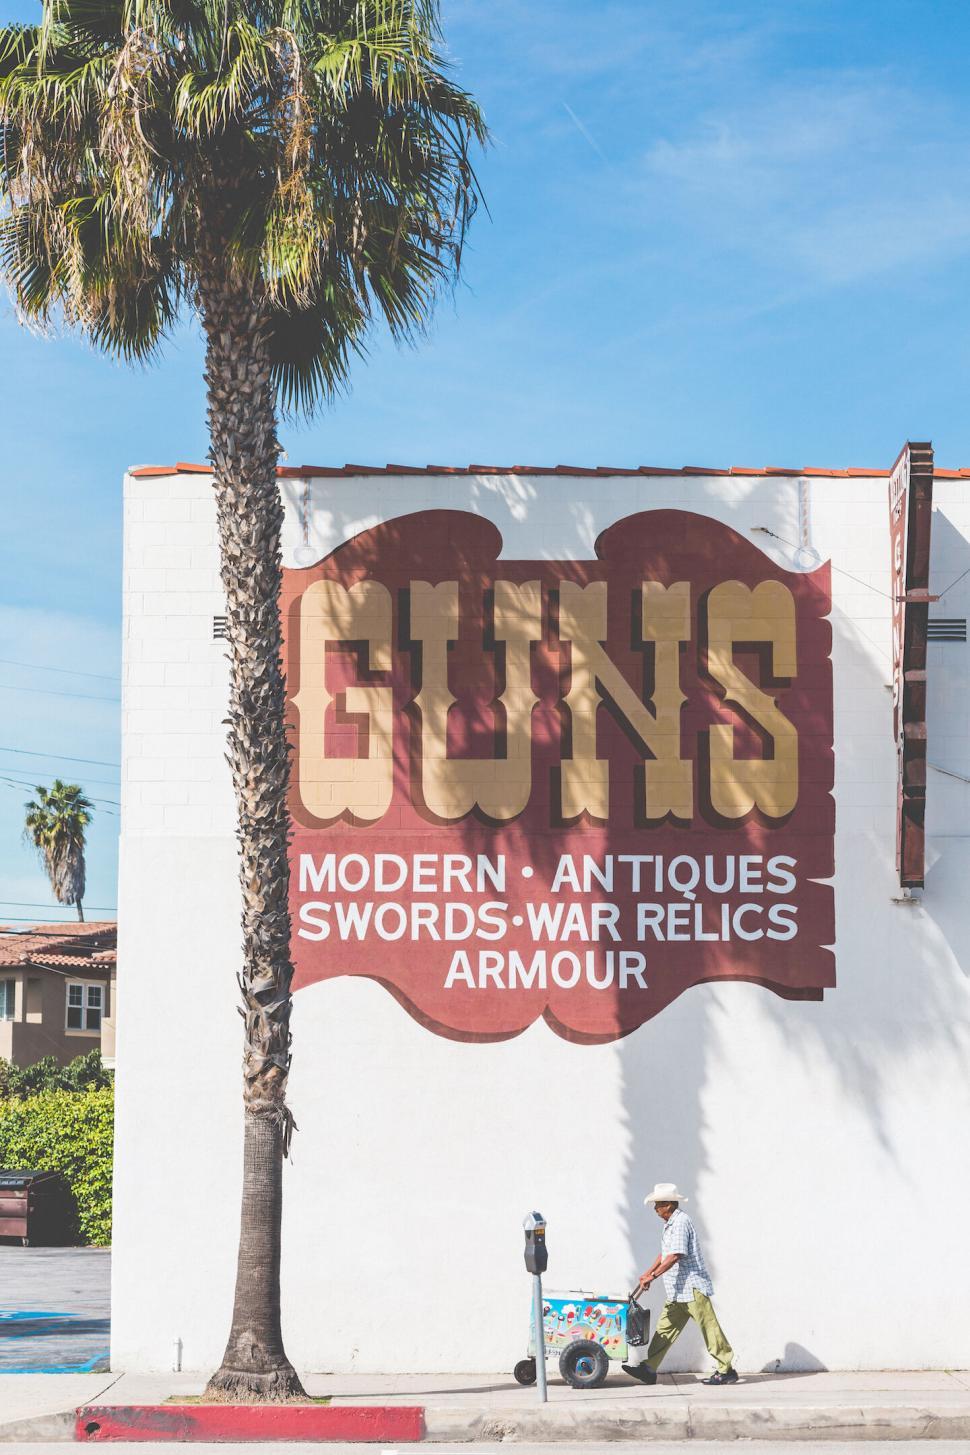 Free Image of Urban mural advertising guns and armor 